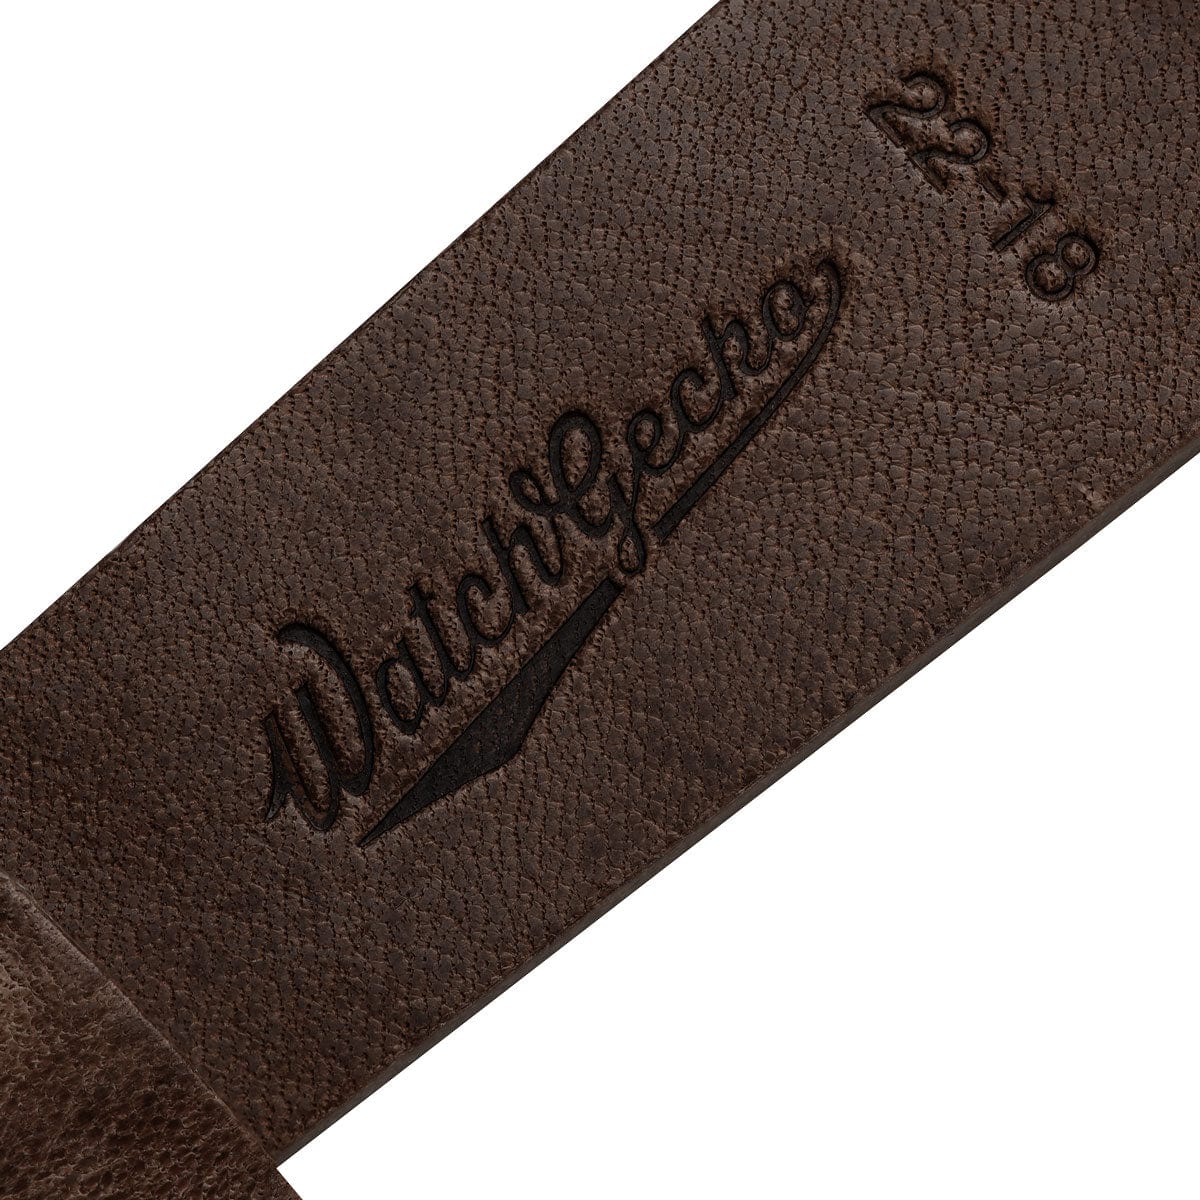 Simple Handmade Italian Leather Watch Strap - Chocolate Brown